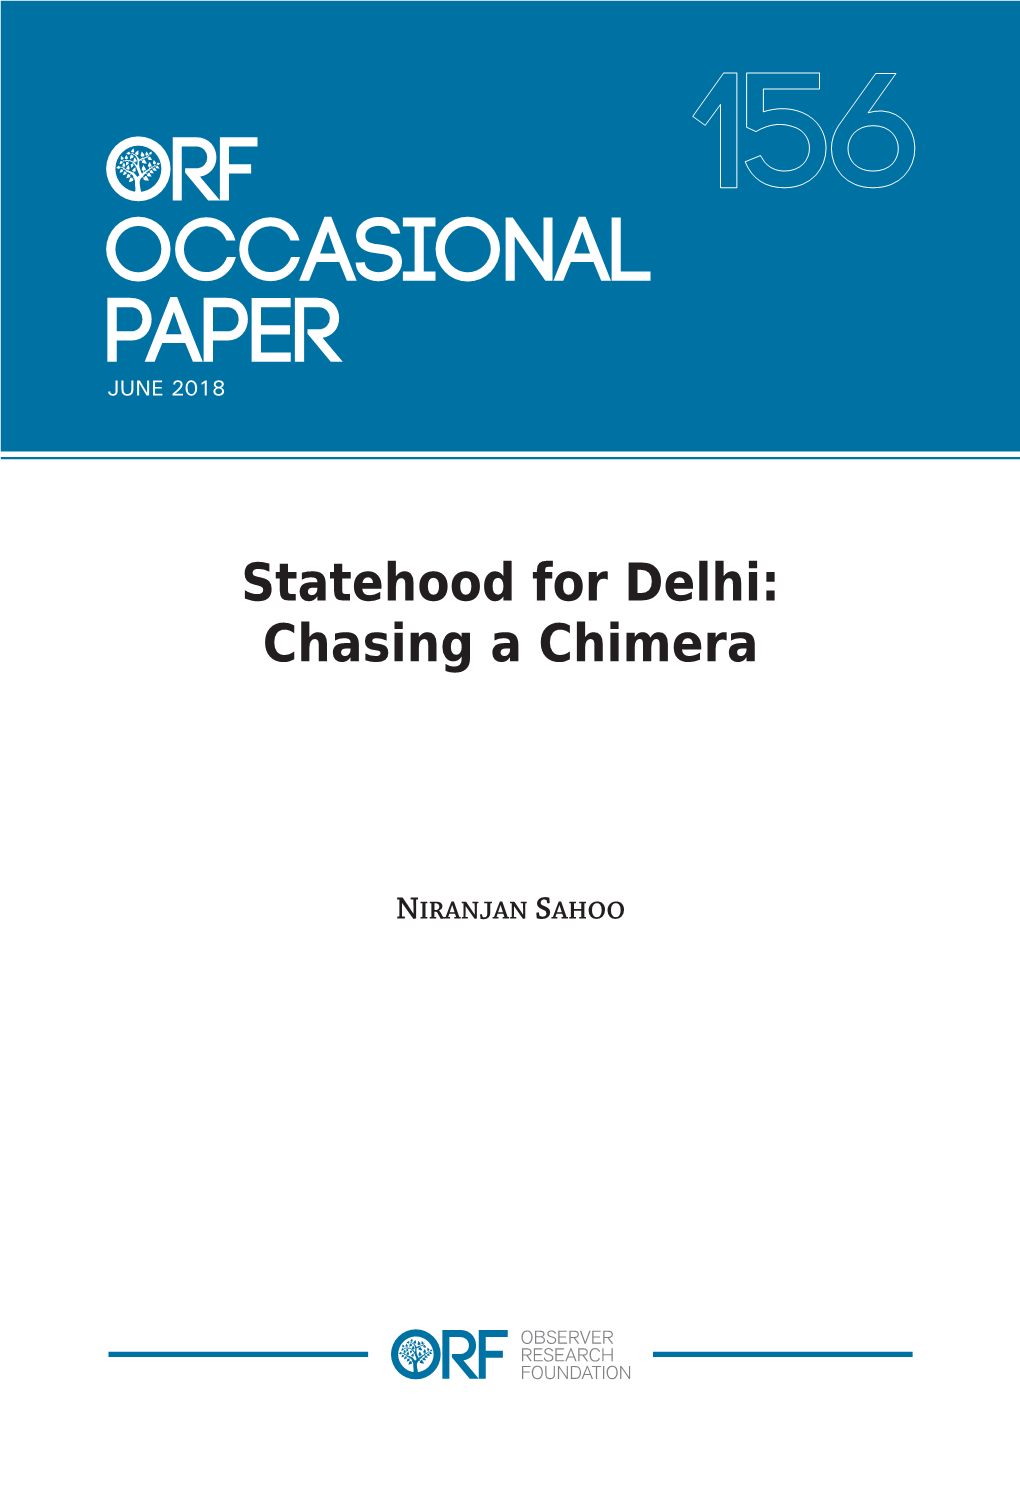 Statehood for Delhi: Chasing a Chimera